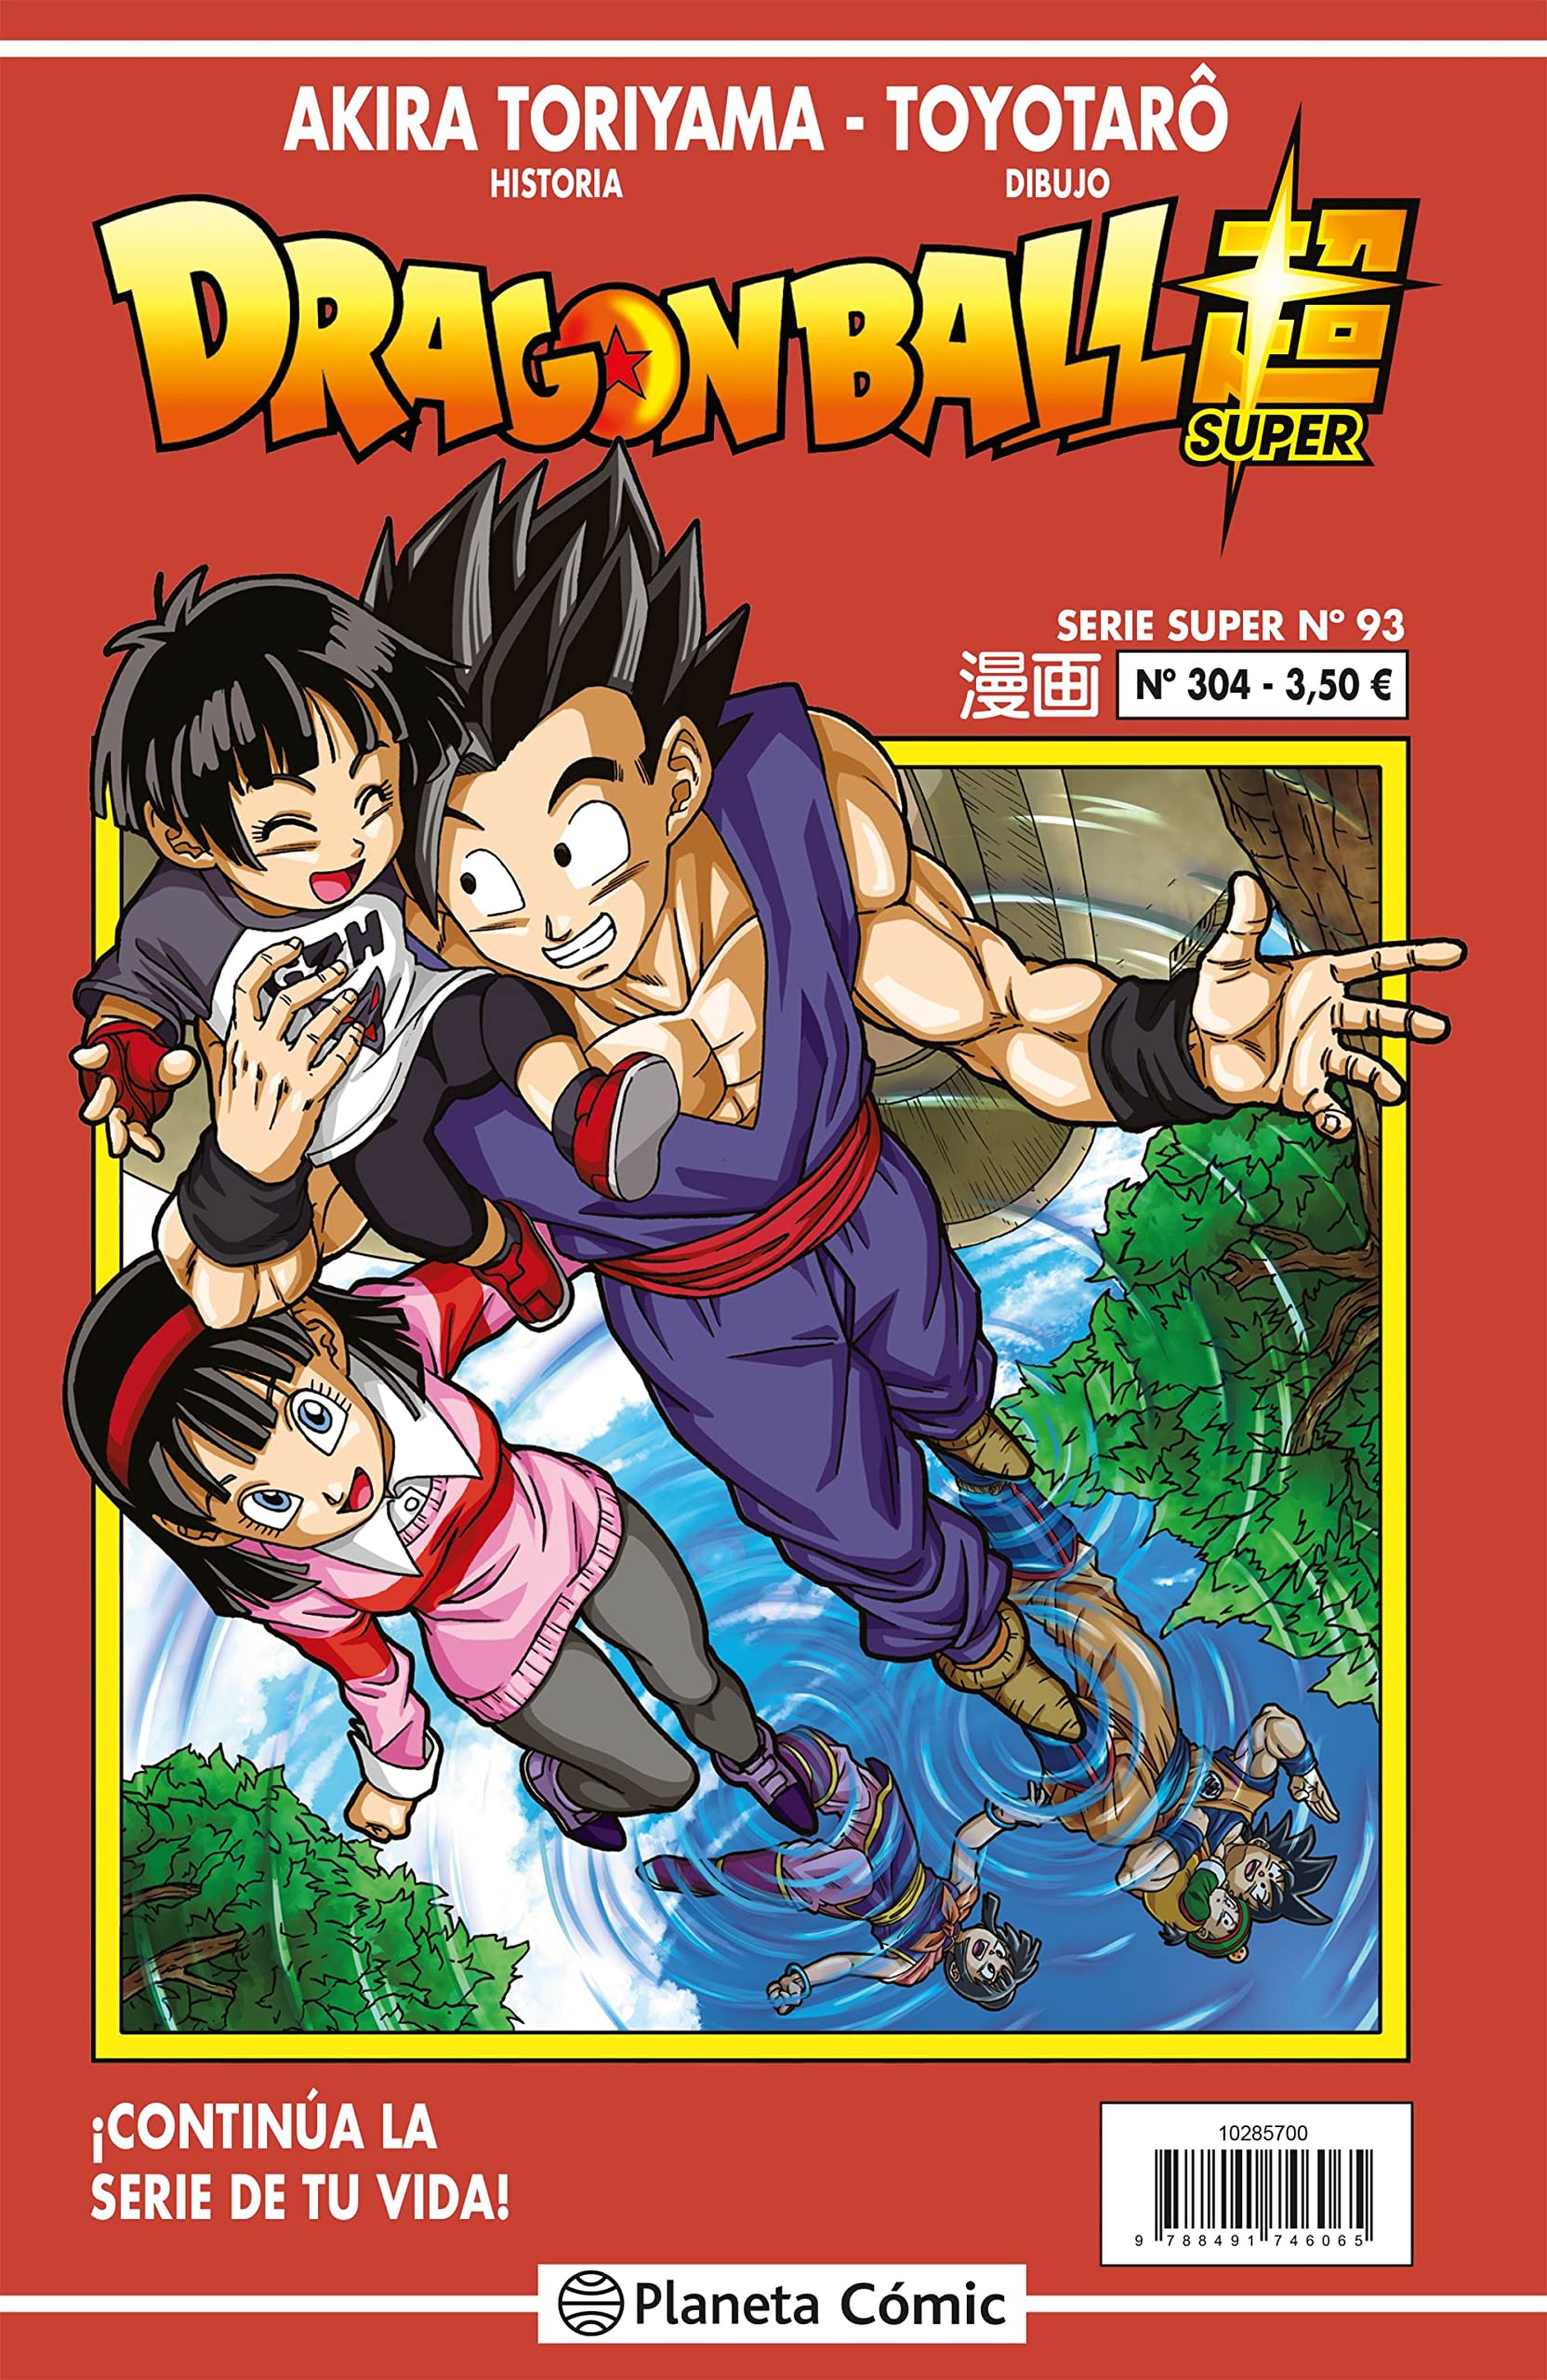 Leer Dragon Ball Super Manga Capitulo 90 en Español Gratis Online